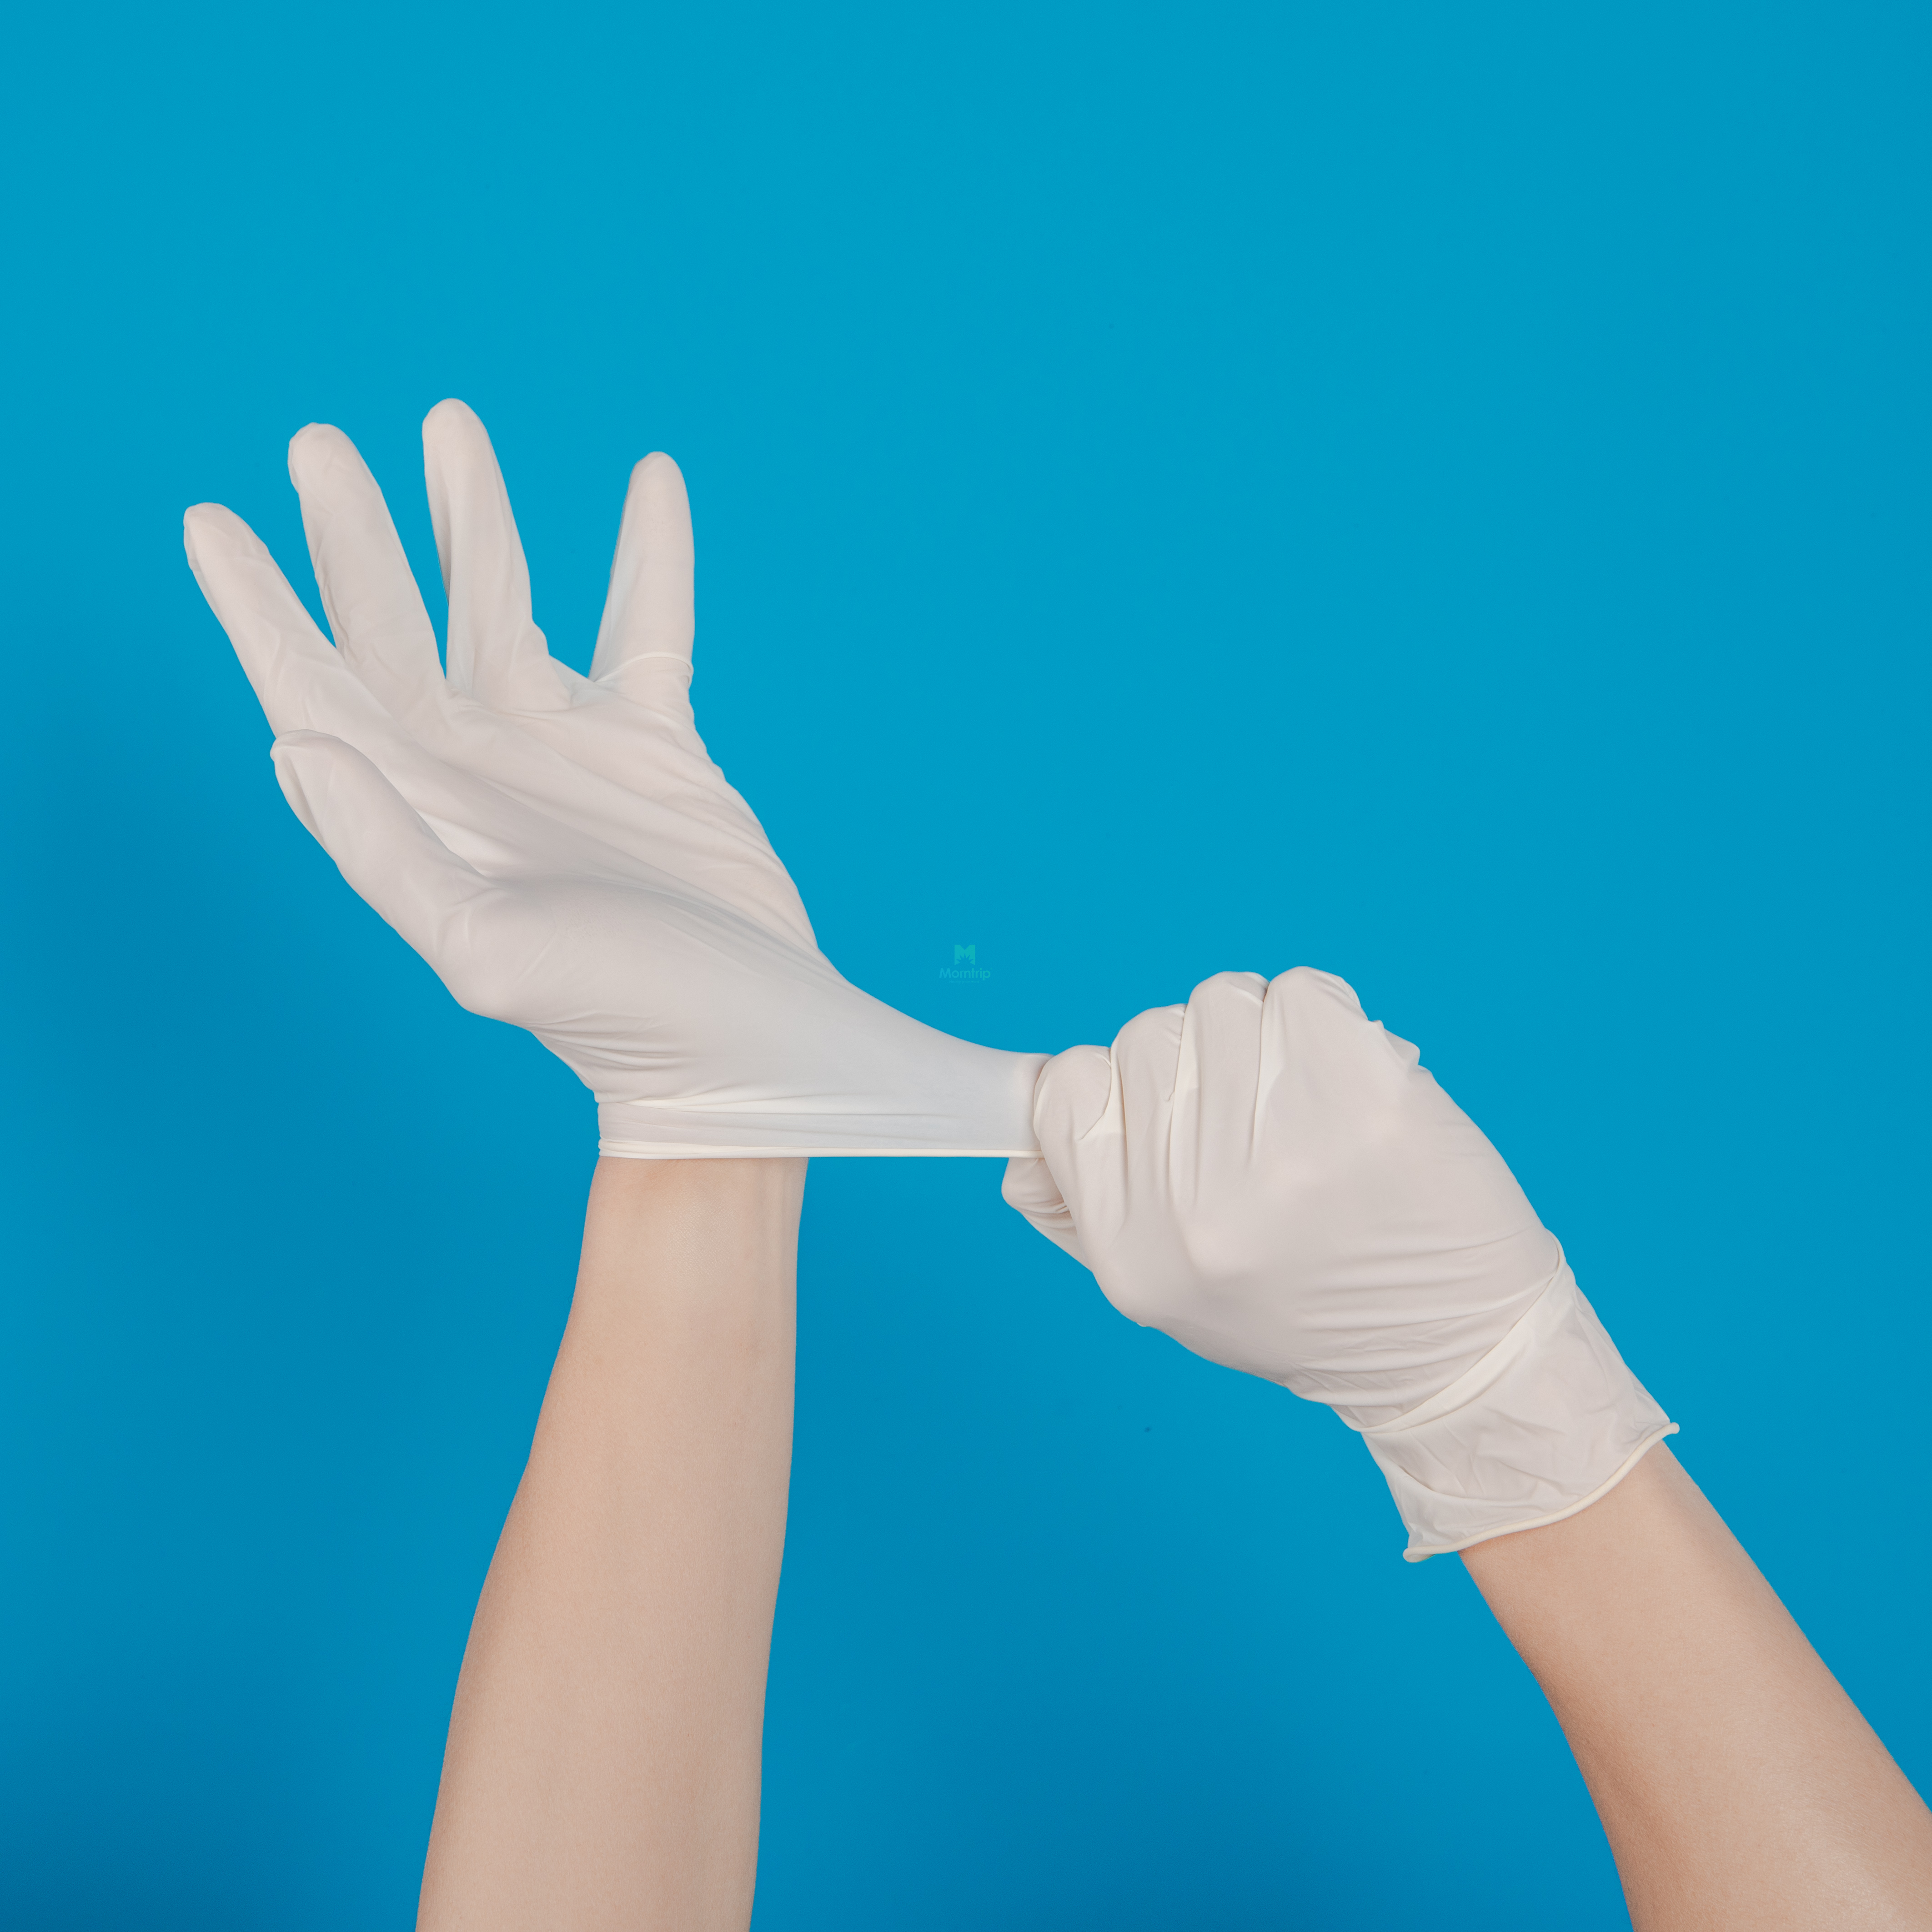 Barbar Non Sterile Safety Examination Protective Disposable Latex Gloves